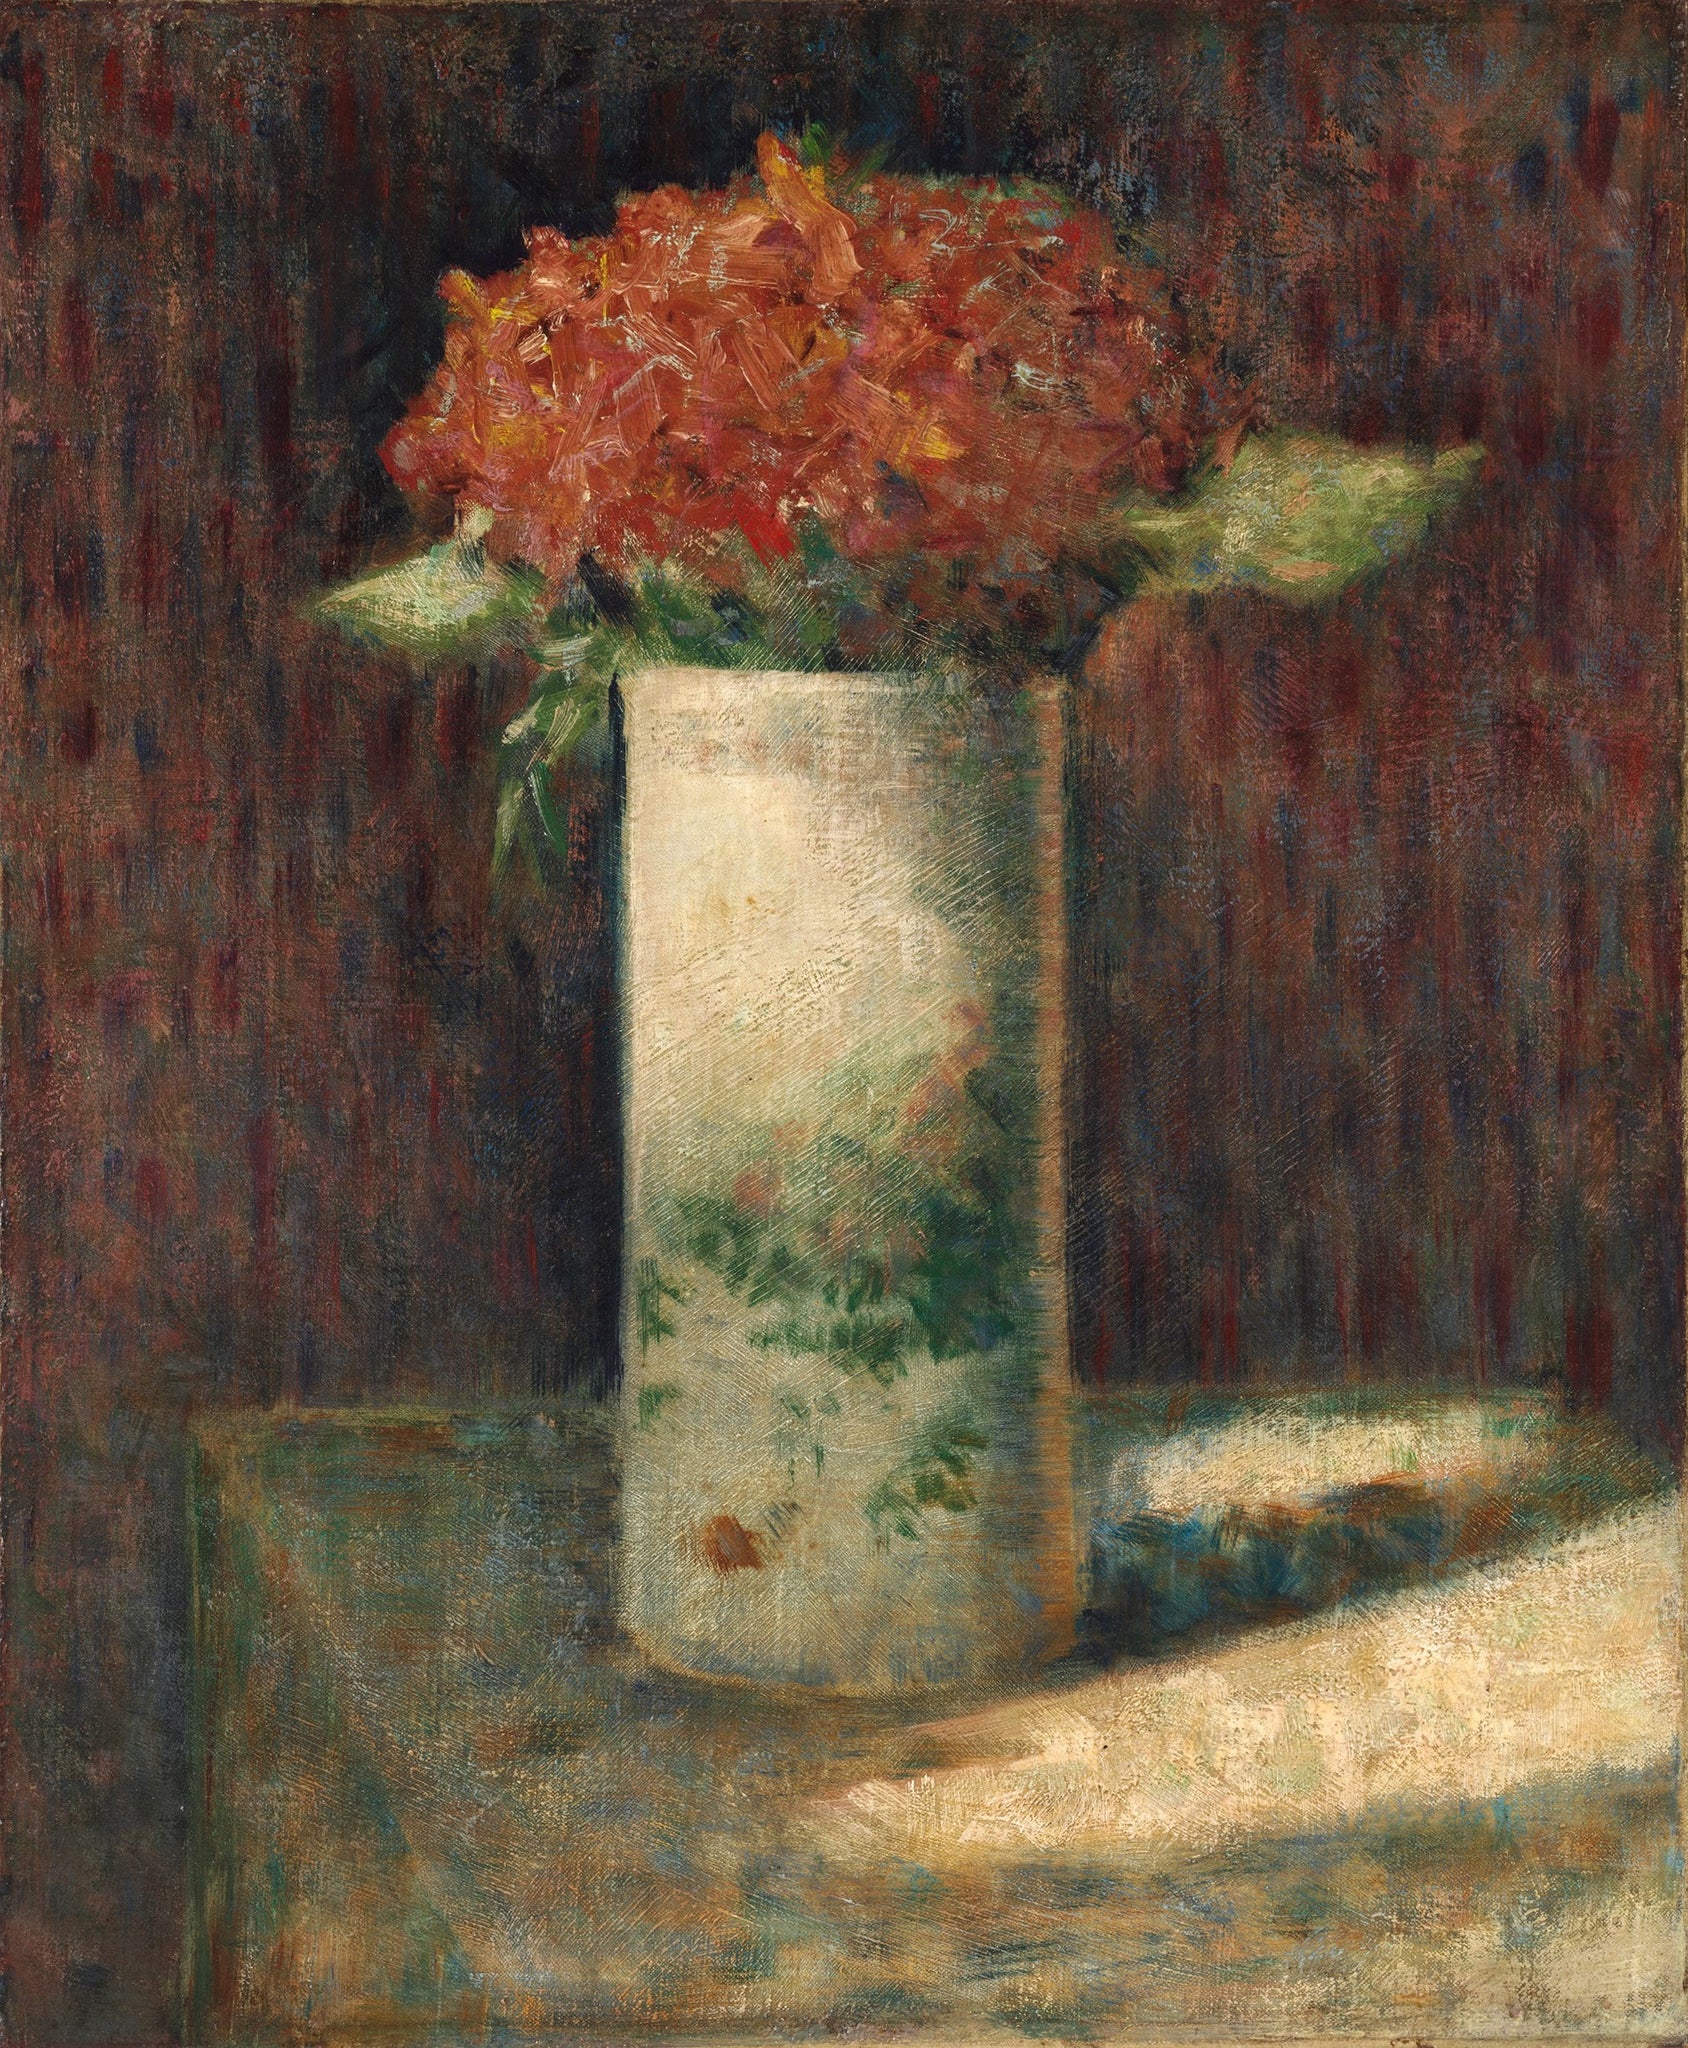 Vase of Flowers (1879) by Georges Seurat - 17" x 22" Fine Art Print